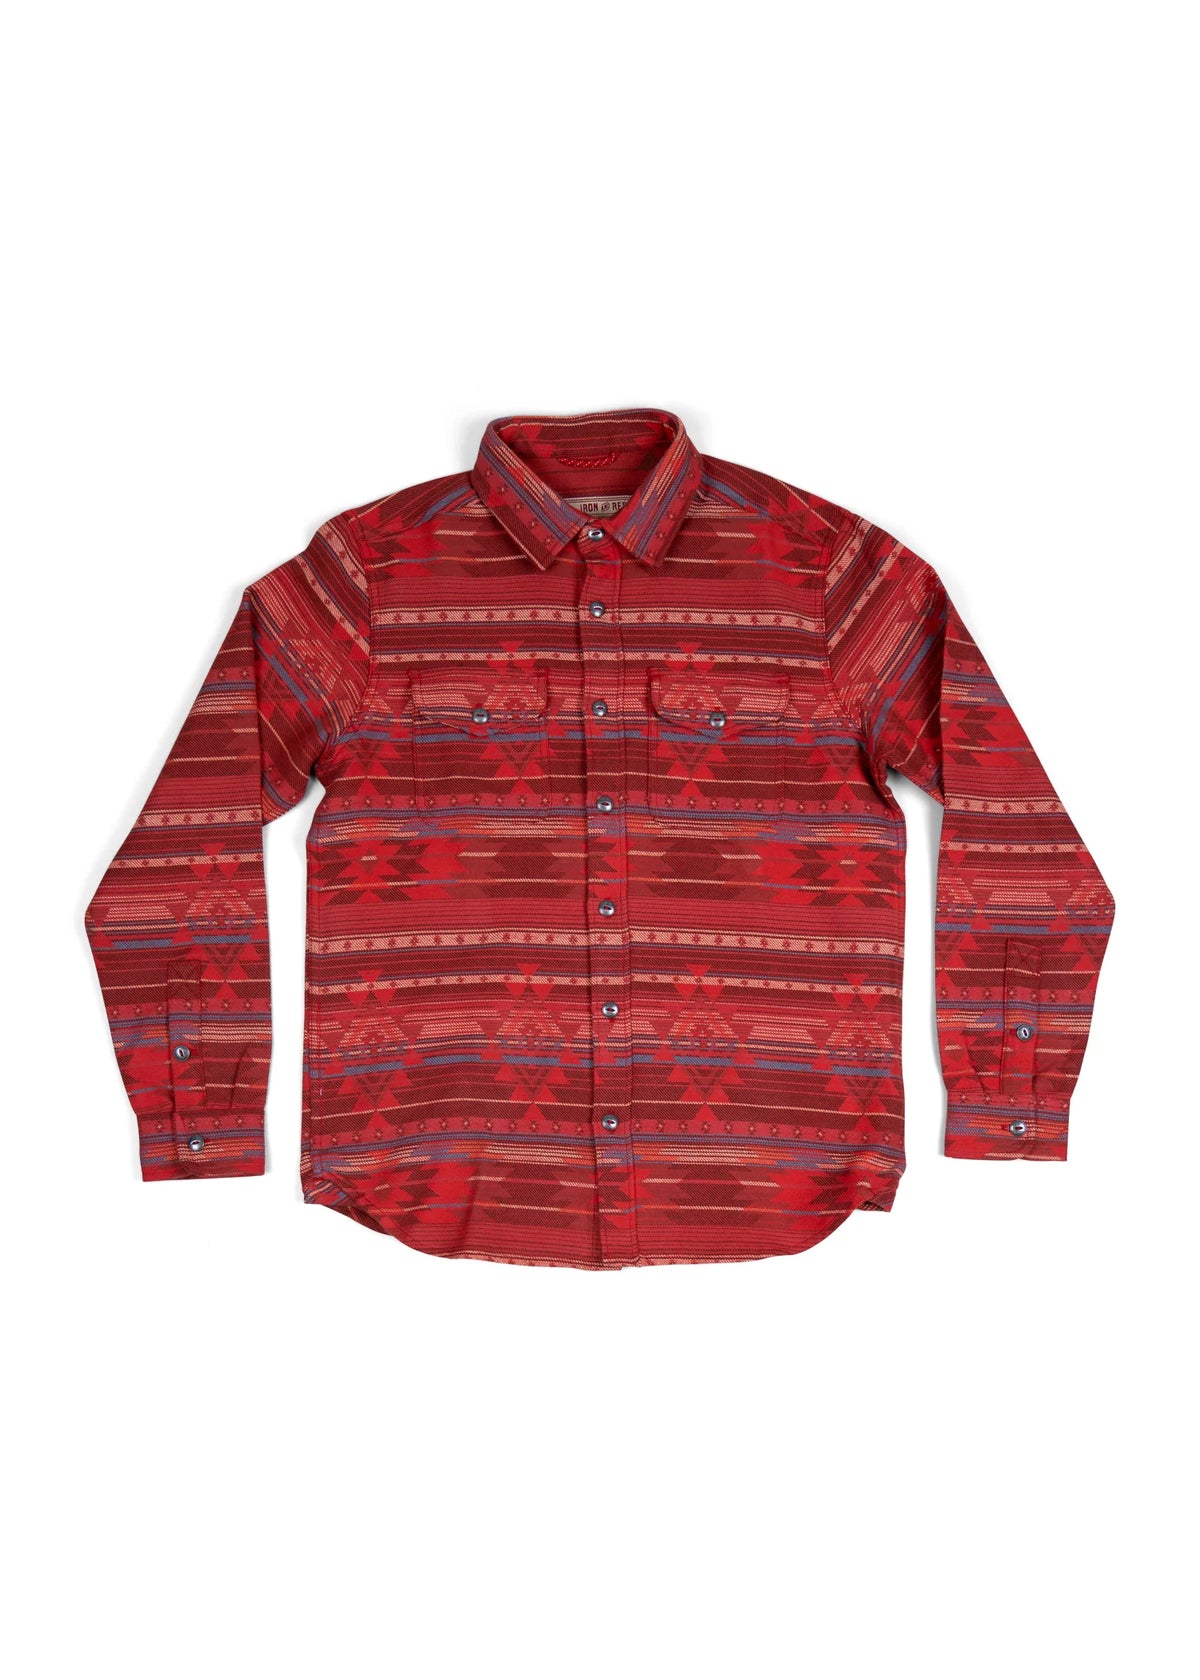 IRON & RESIN Navajo Shirt - Red